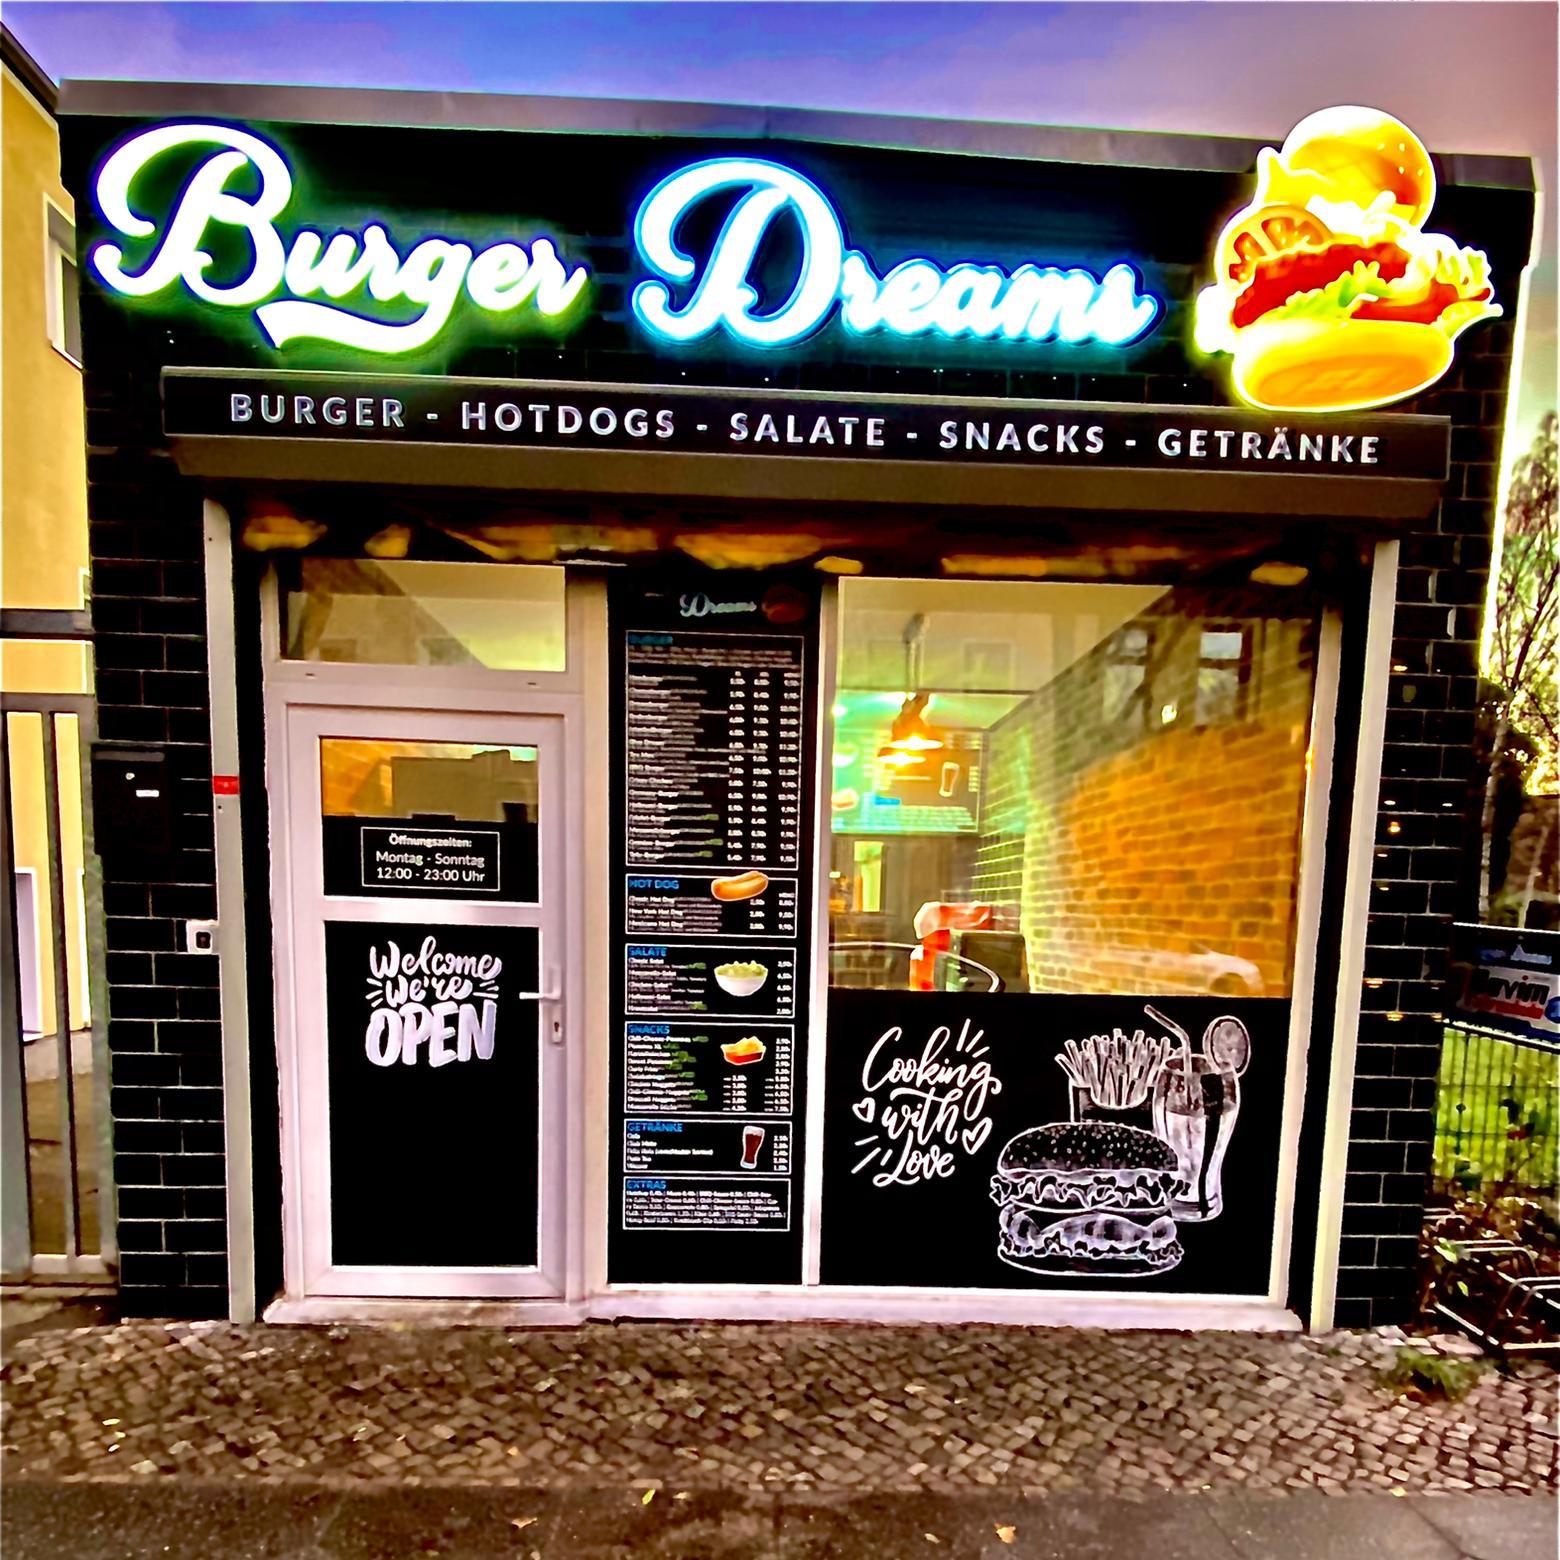 Restaurant "Burger Dreams" in Berlin